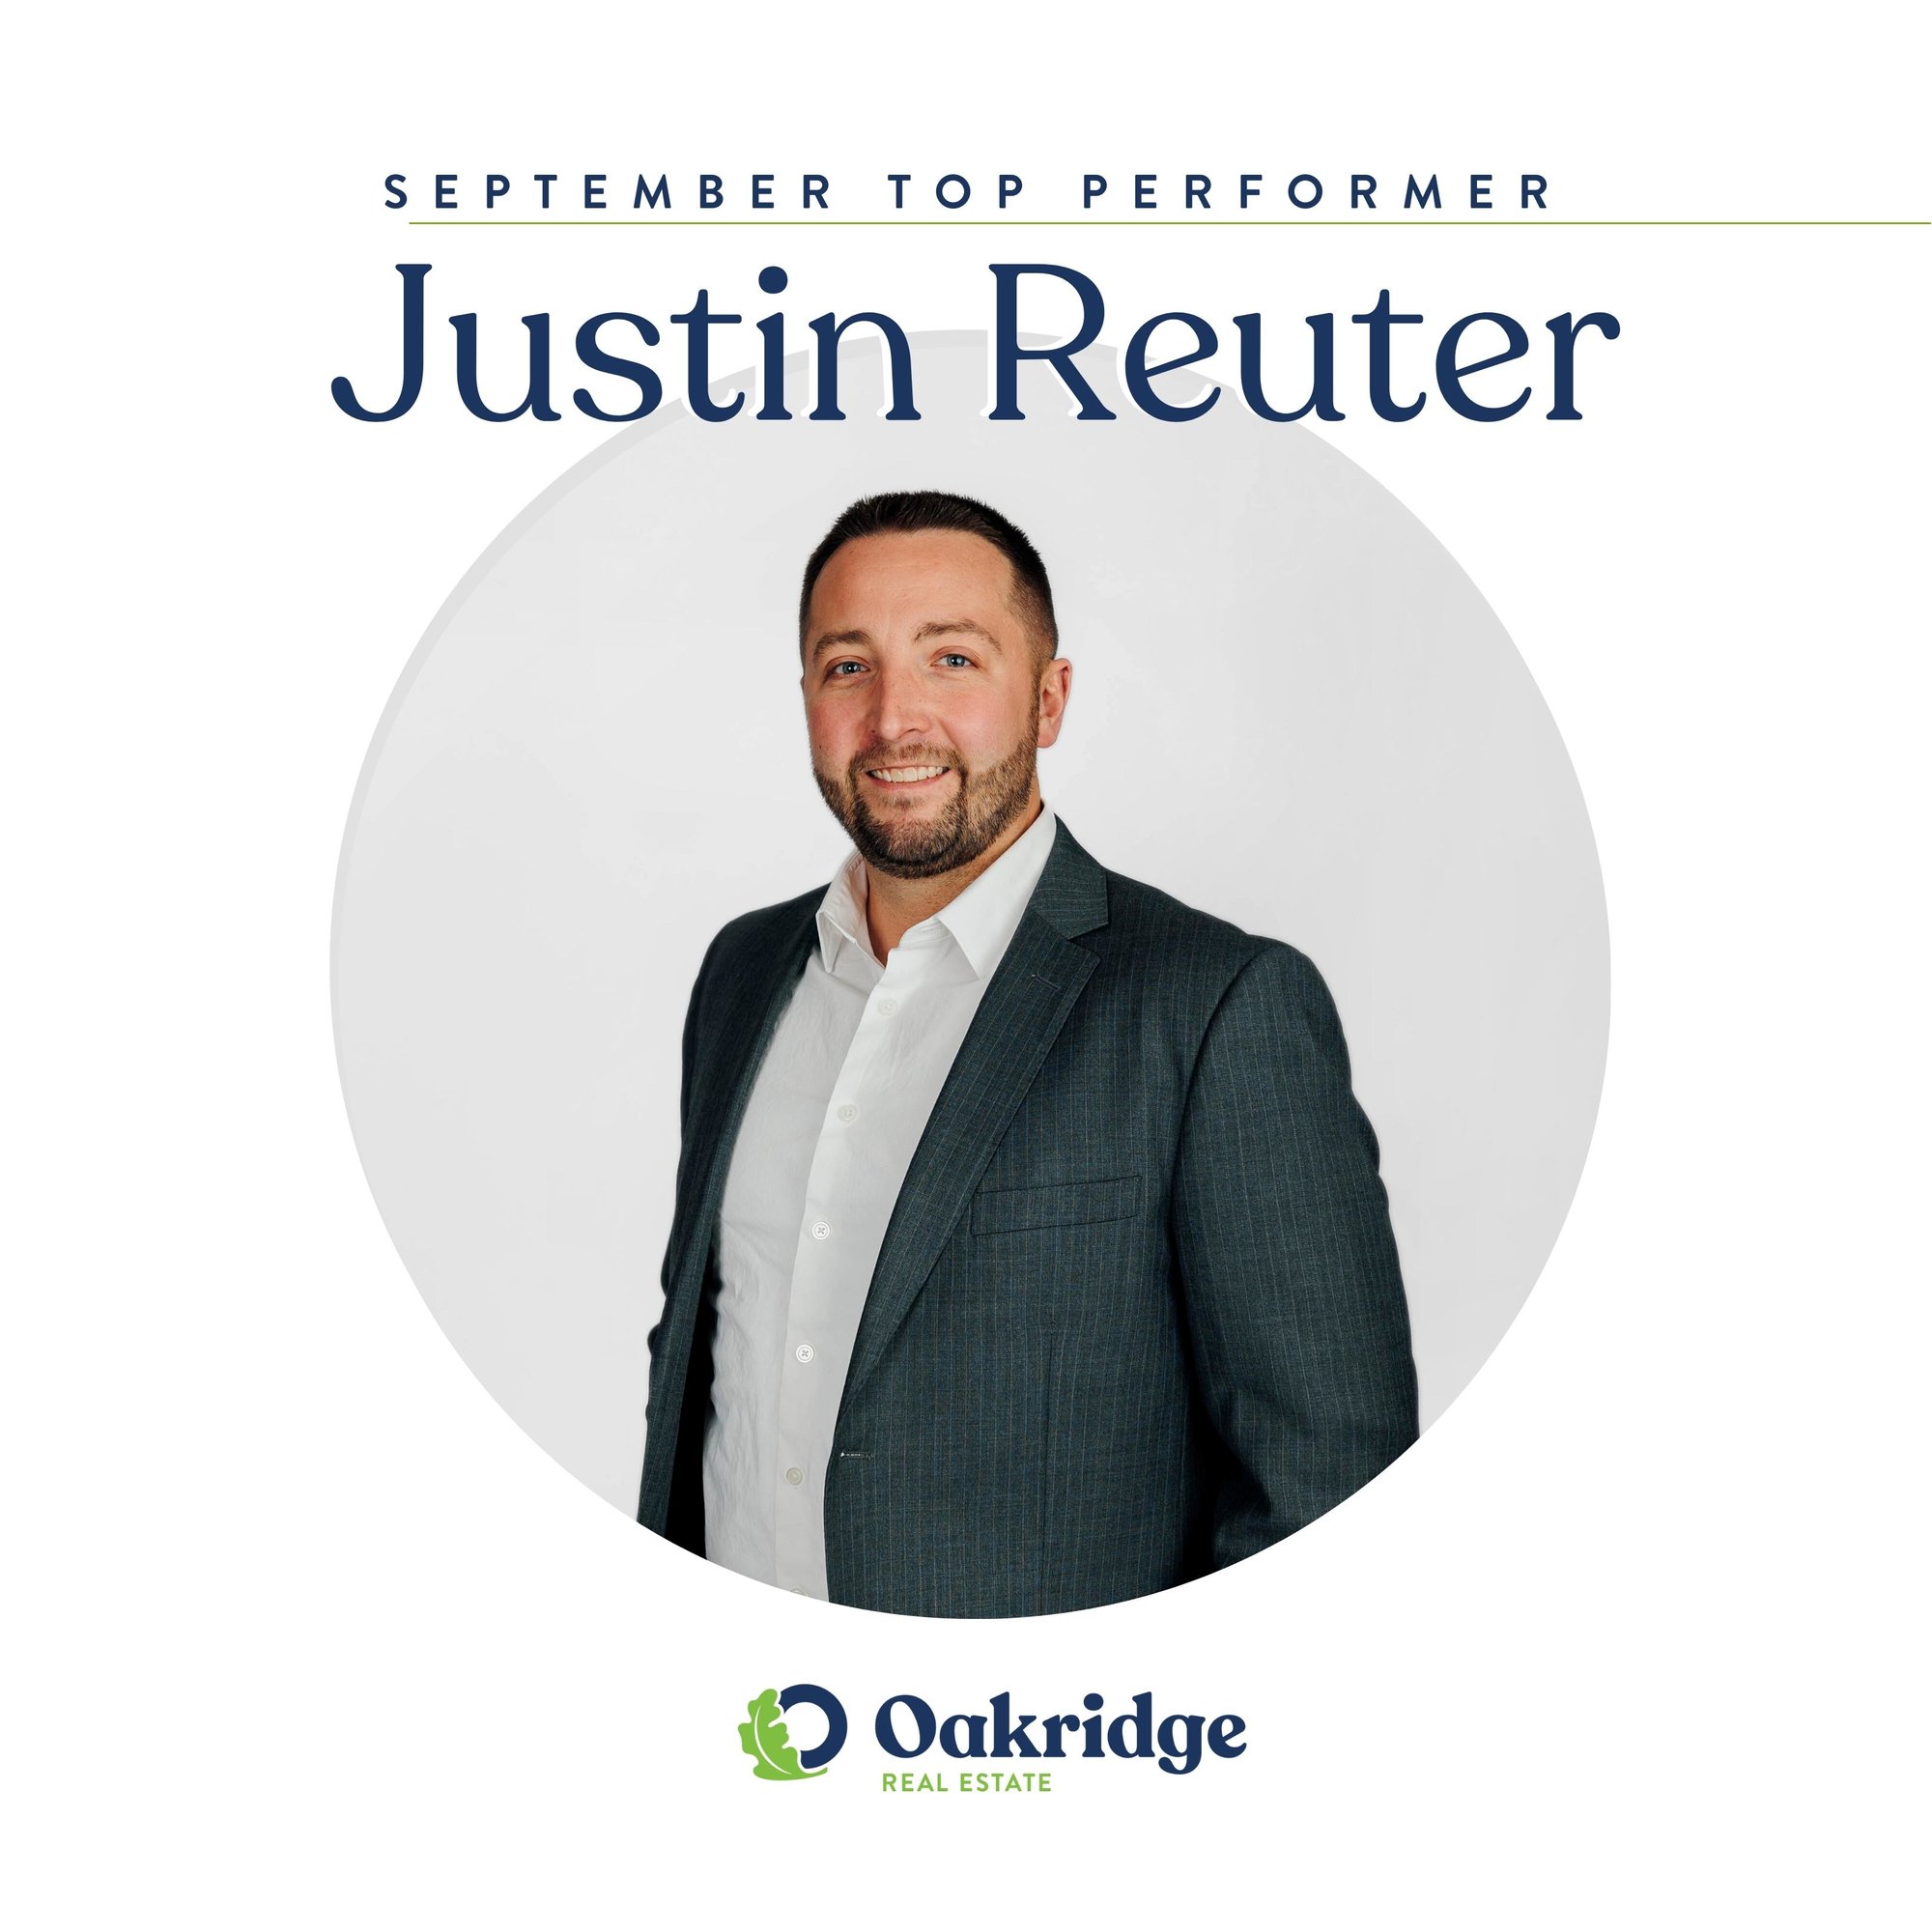 Justin Reuter September Top Performer | Oakridge Real Estate